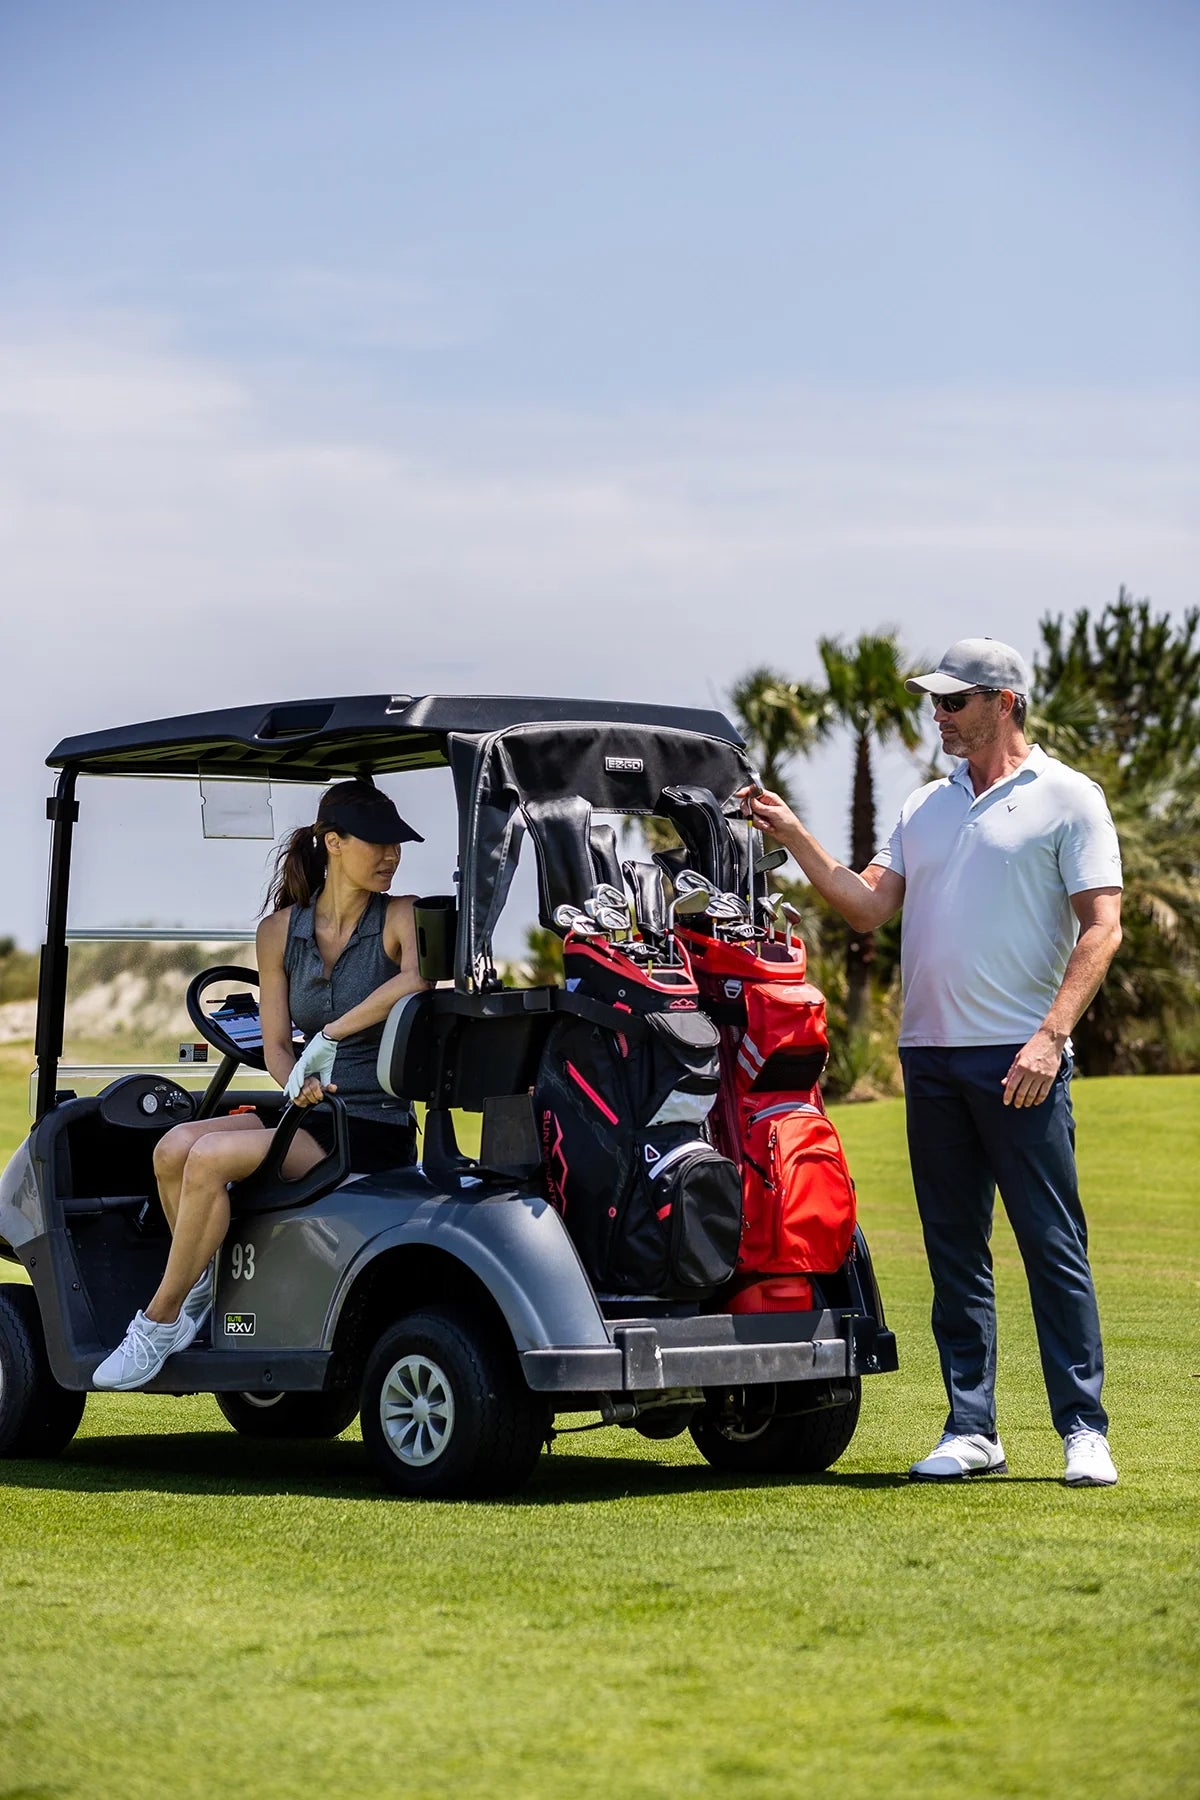 How to organise a golf bag - Golf Care Blog